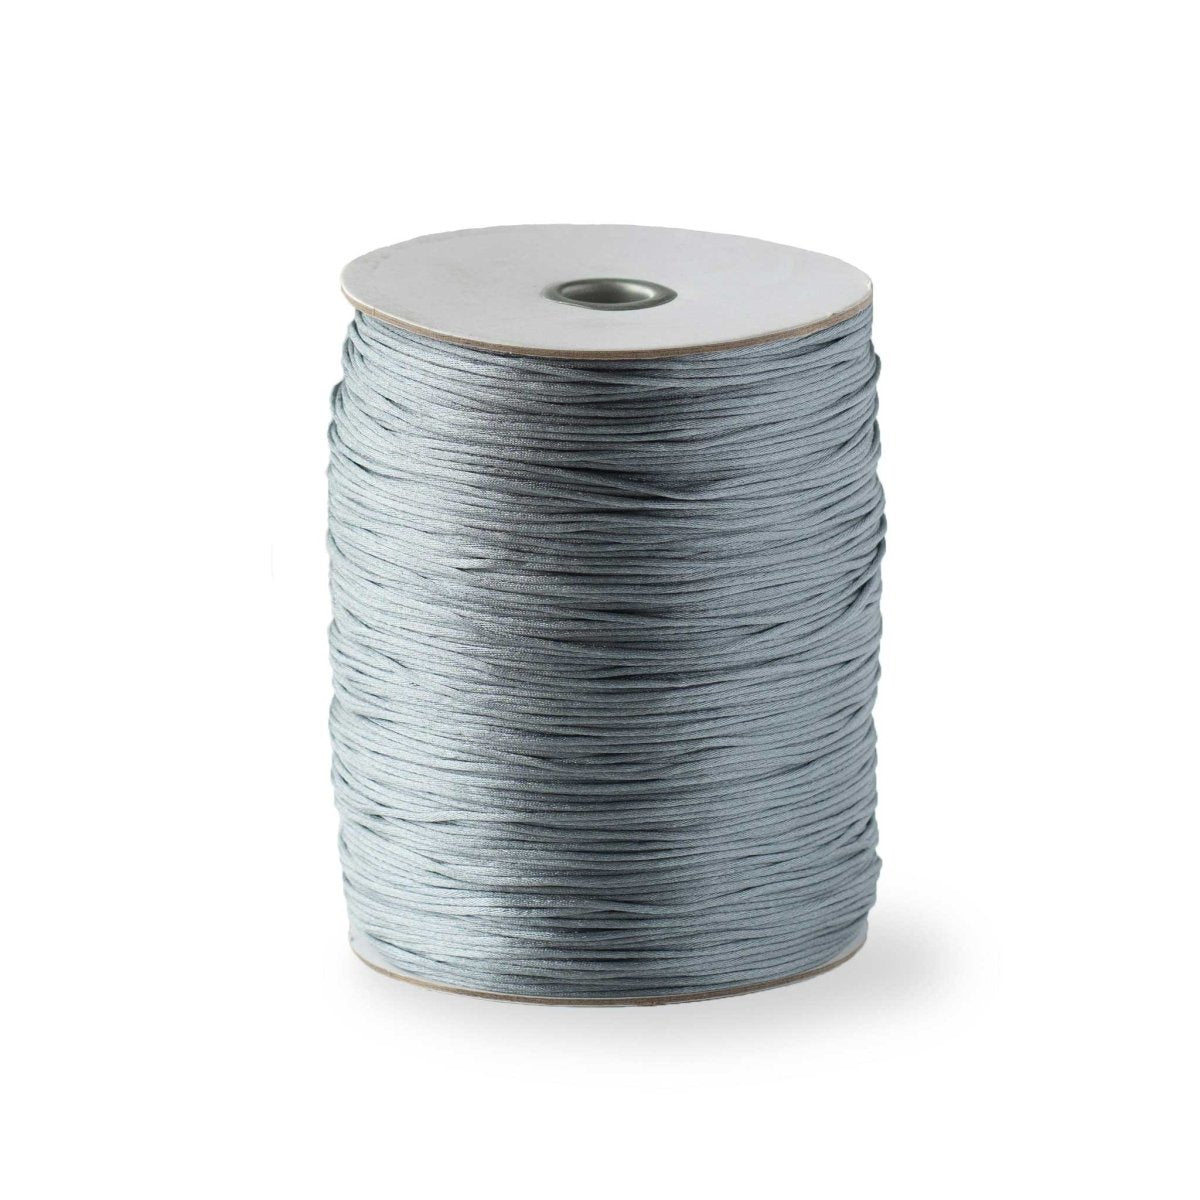 Cording Nylon Cord 1.5mm - Spools Grey from Cara & Co Craft Supply